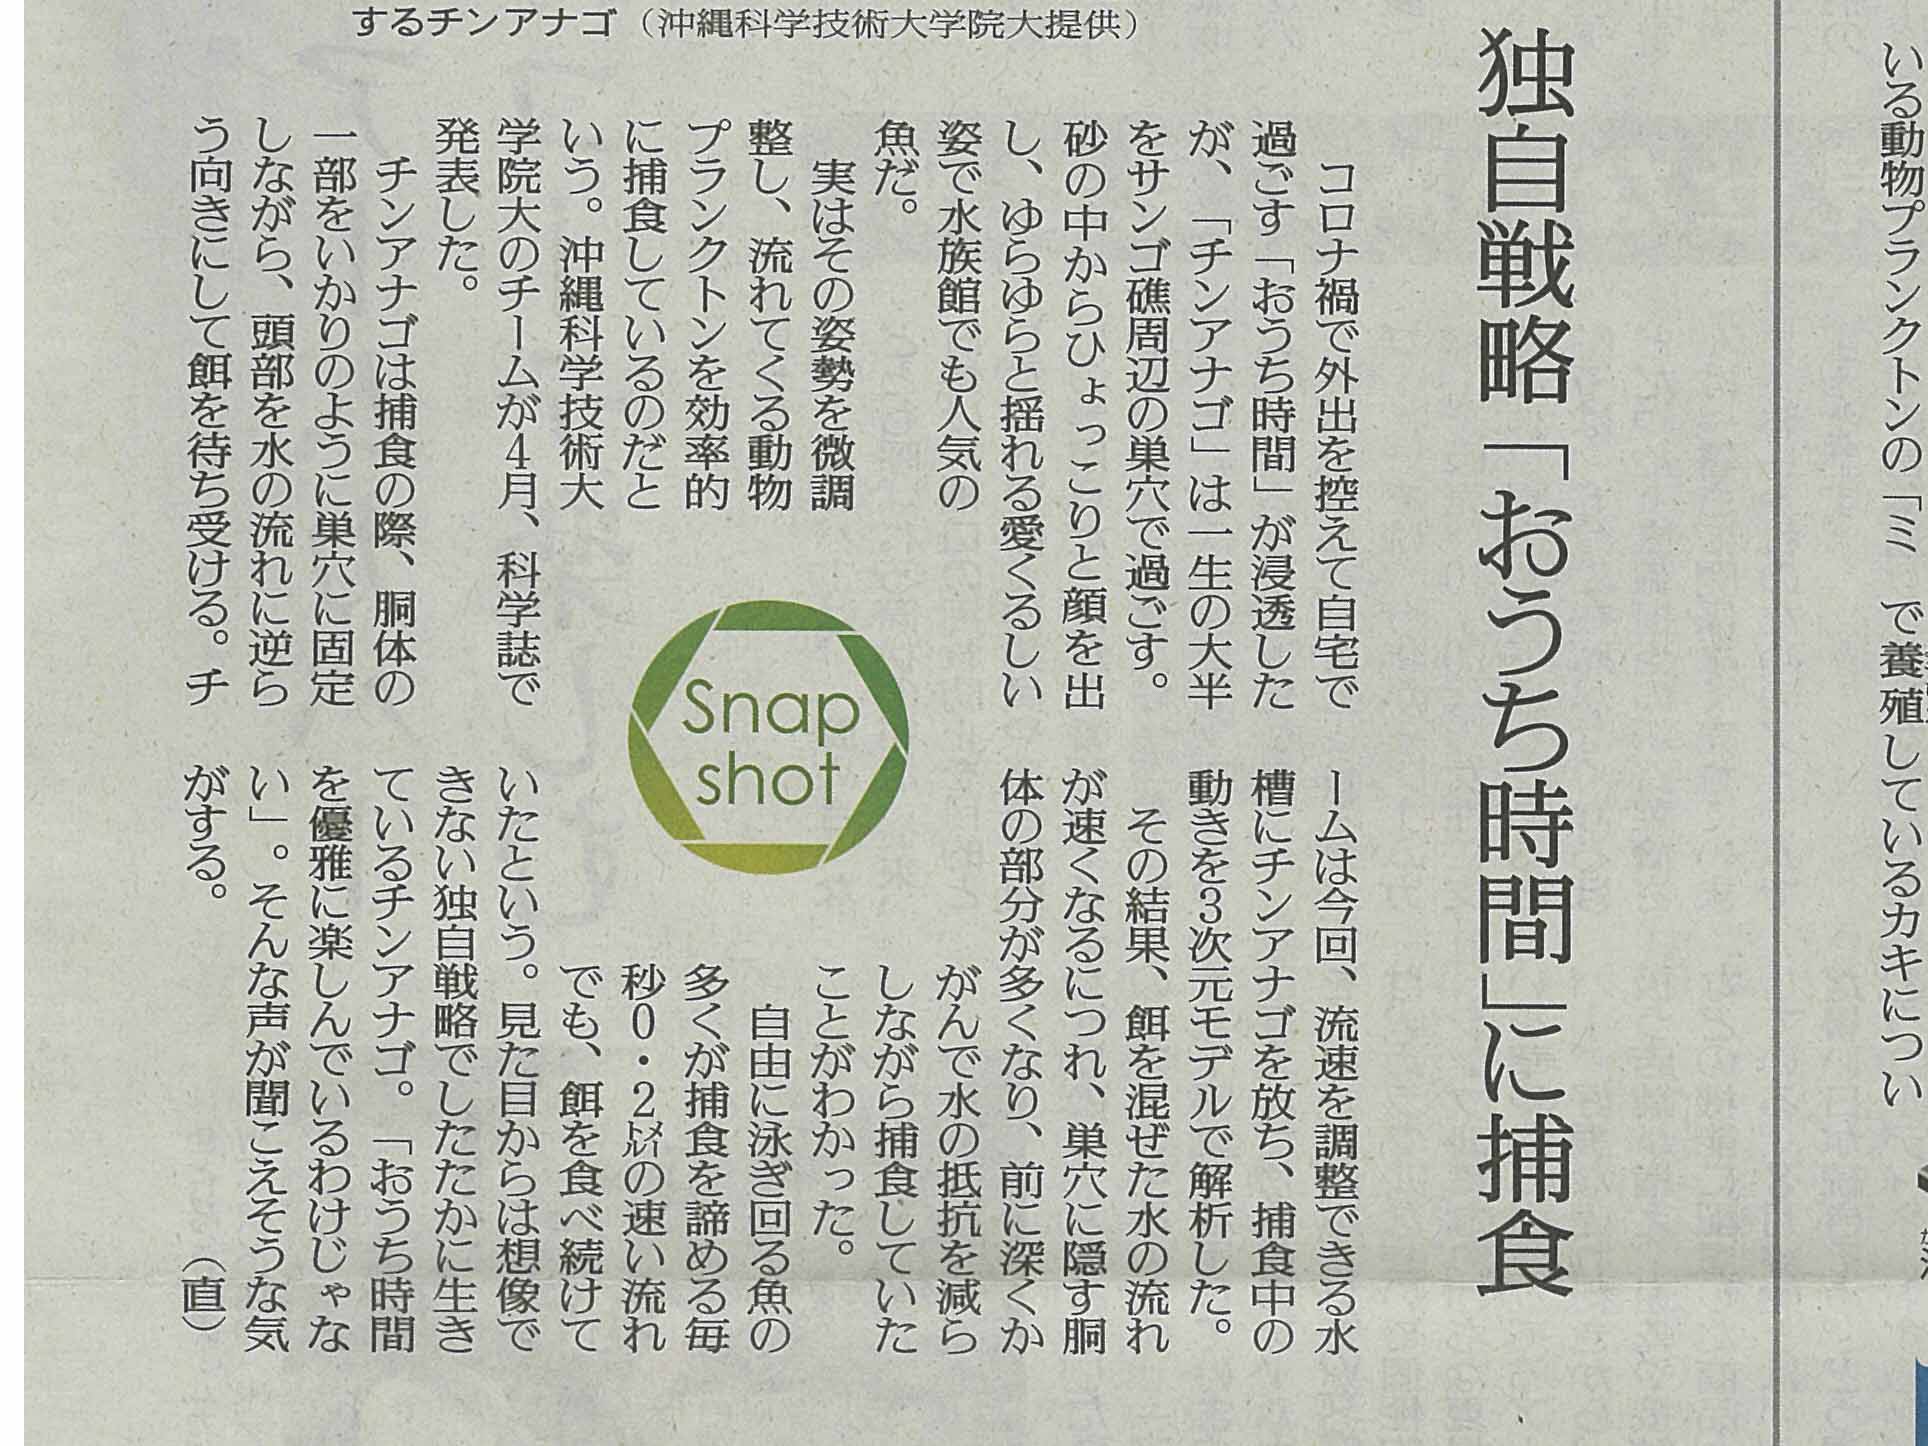 Yomiuri news paper